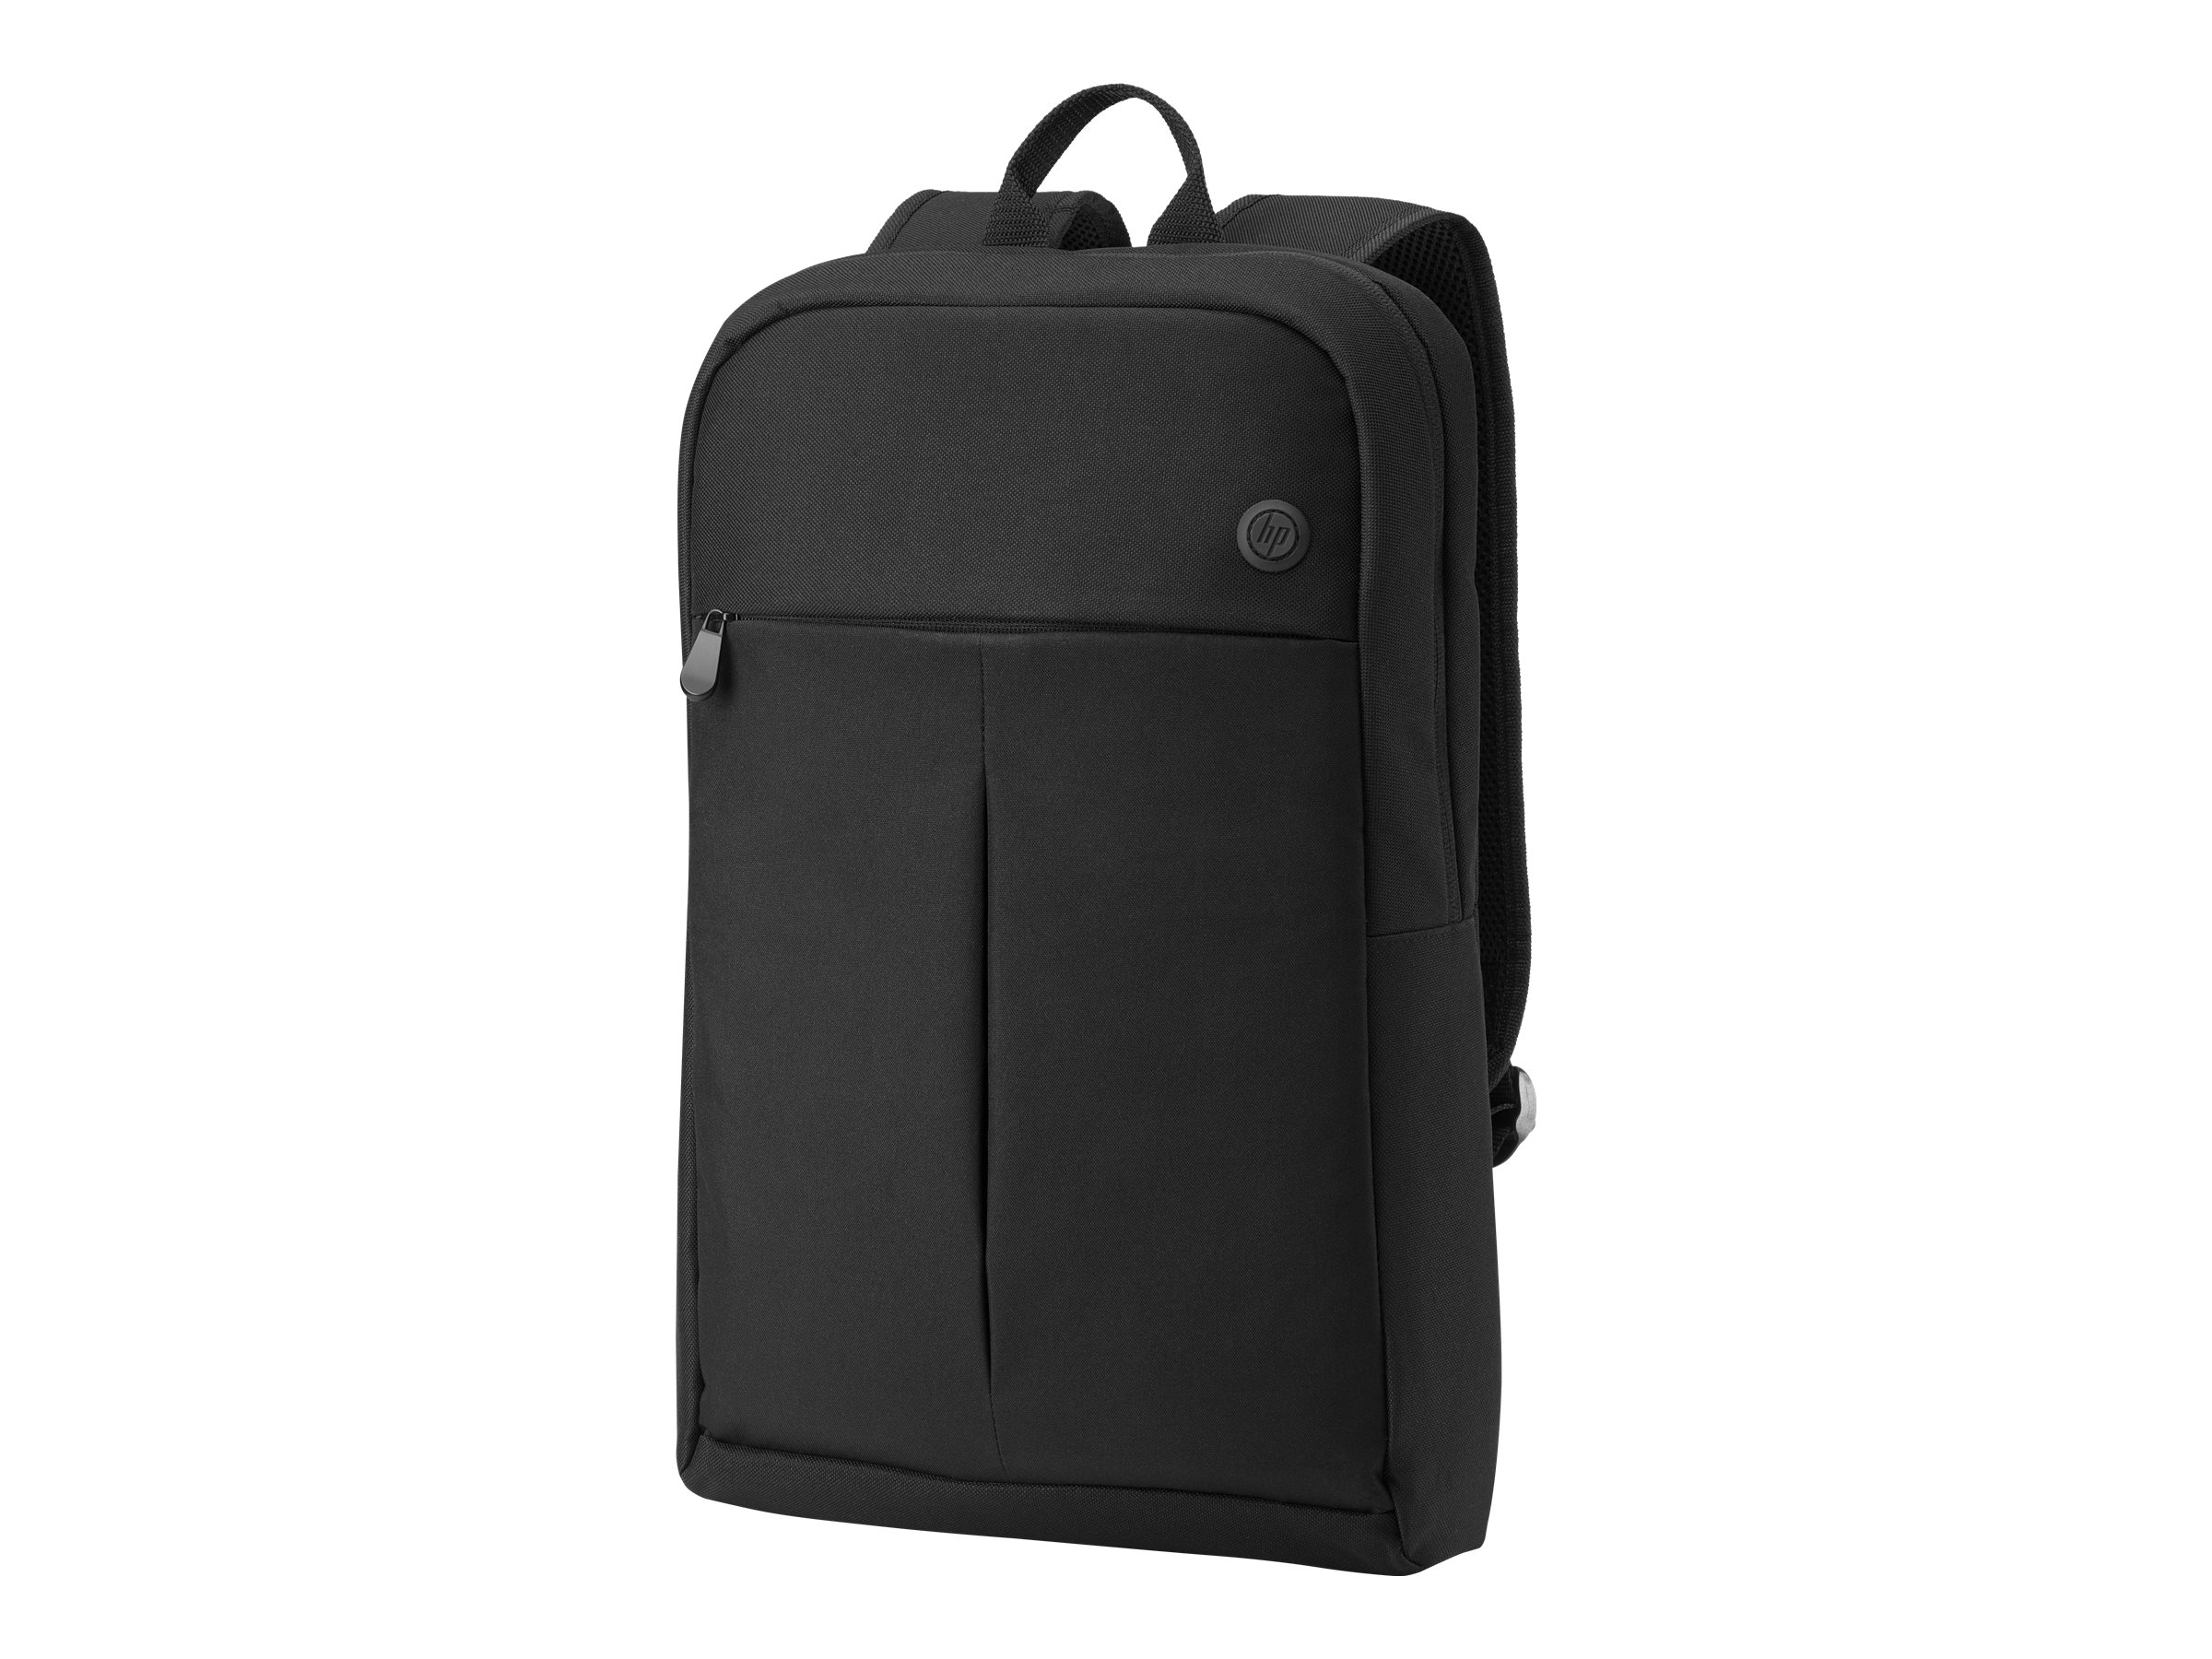 HP Prelude - Notebook carrying case | Rucksacktaschen